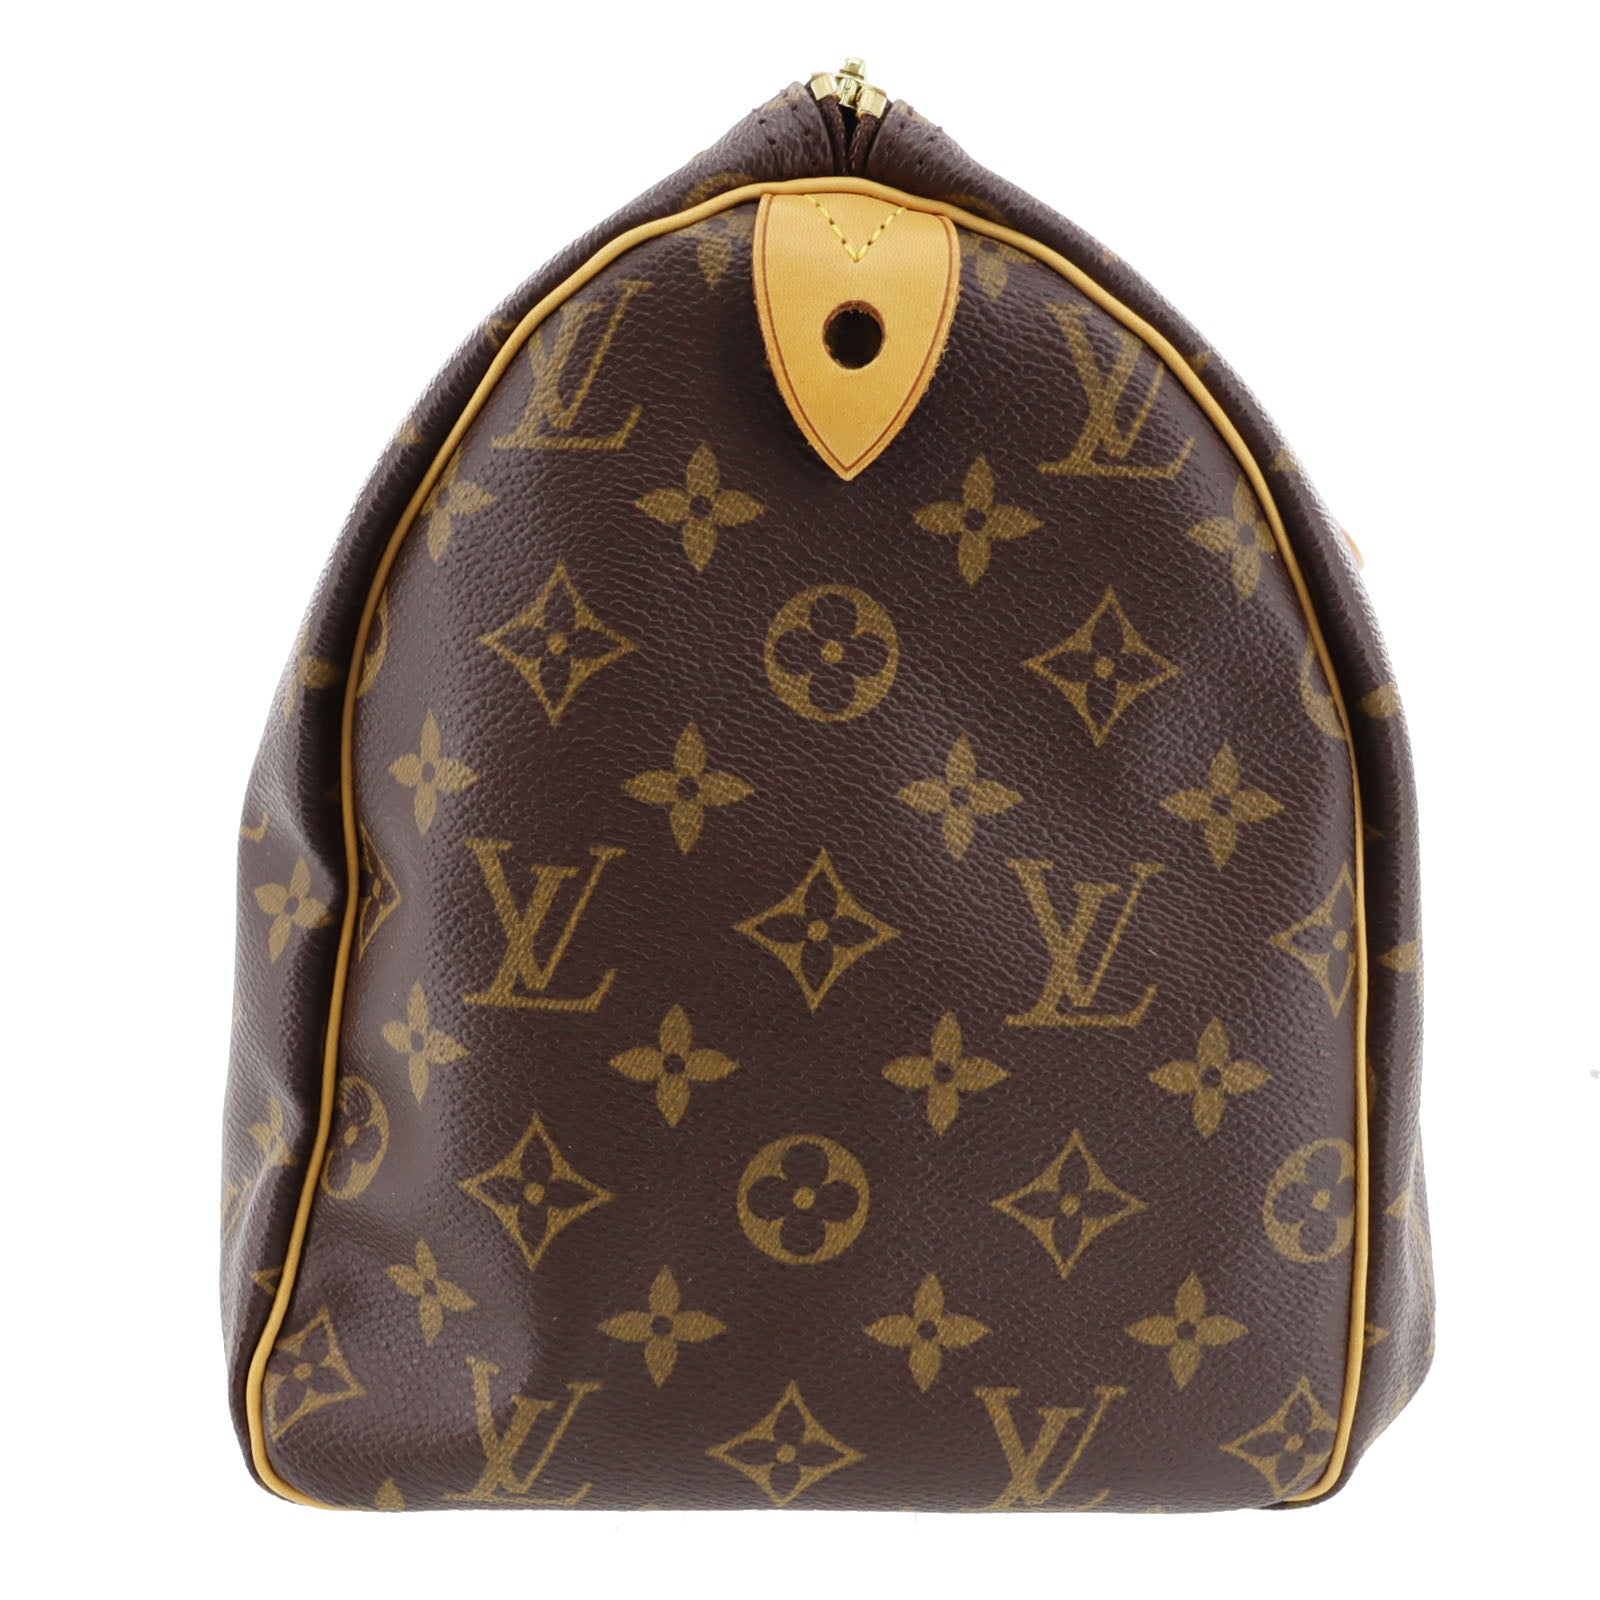 Louis Vuitton Speedy 30 Used Handbag Monogram Leather M41526